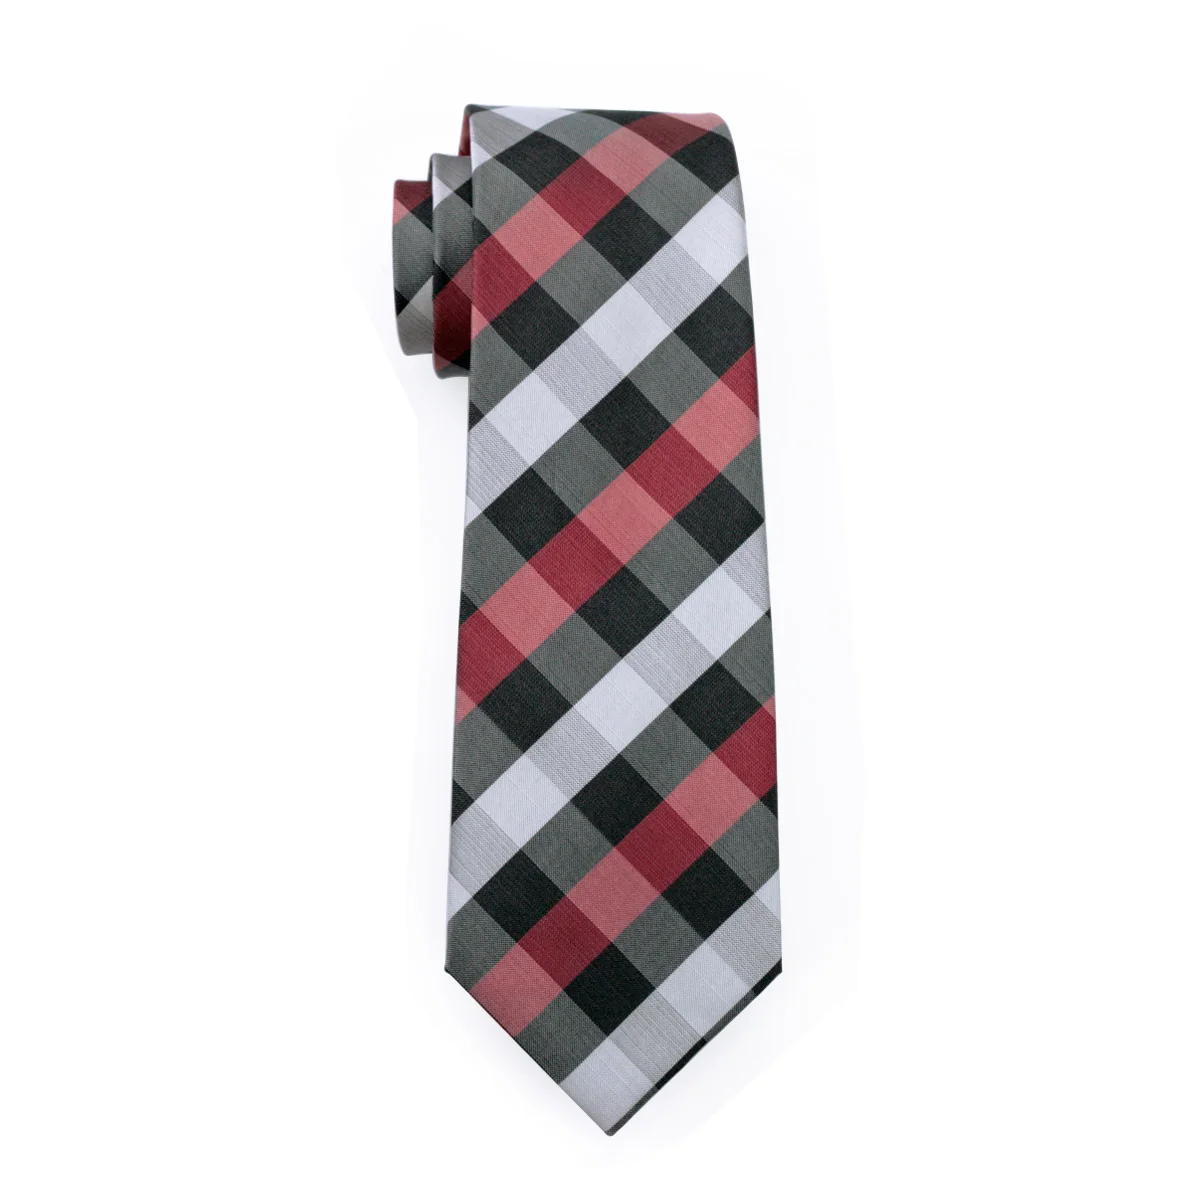 Fa-938 Барри. ван Горячие Для мужчин S Галстуки красный плед галстук Hanky запонки набор Для Мужчин's Бизнес подарок Галстуки для Для мужчин;